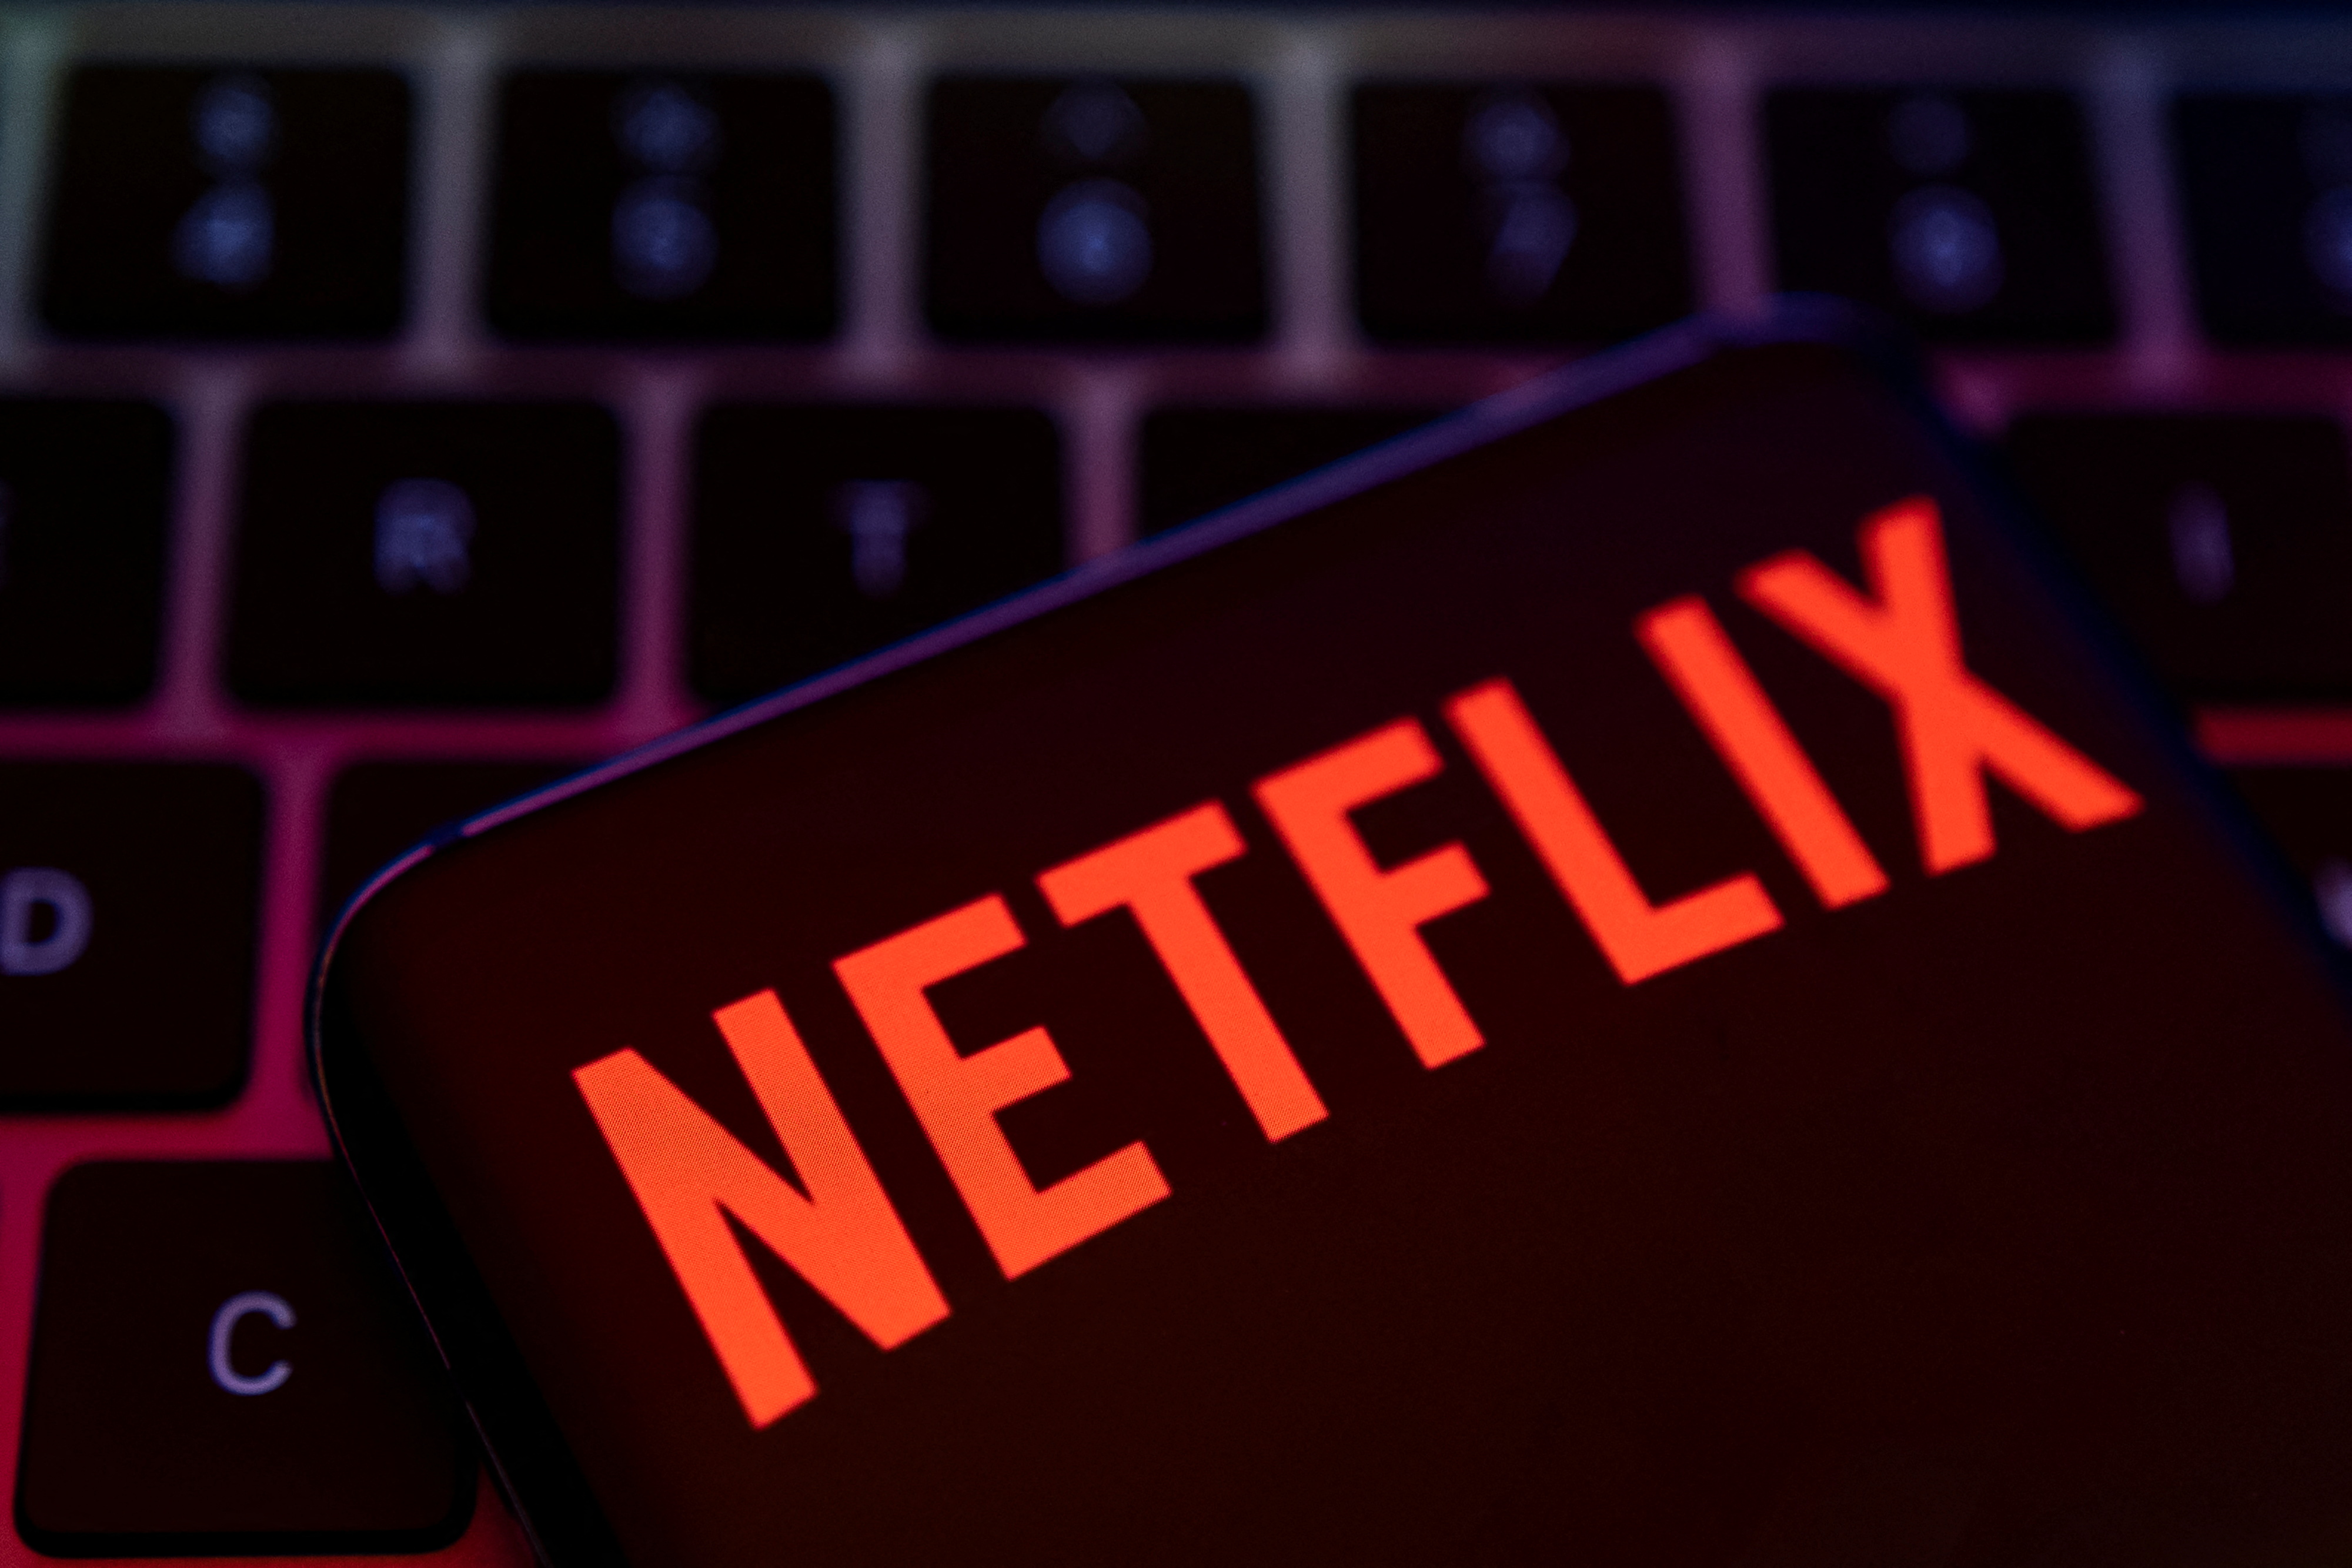 La imagen muestra el logotipo de Netflix.